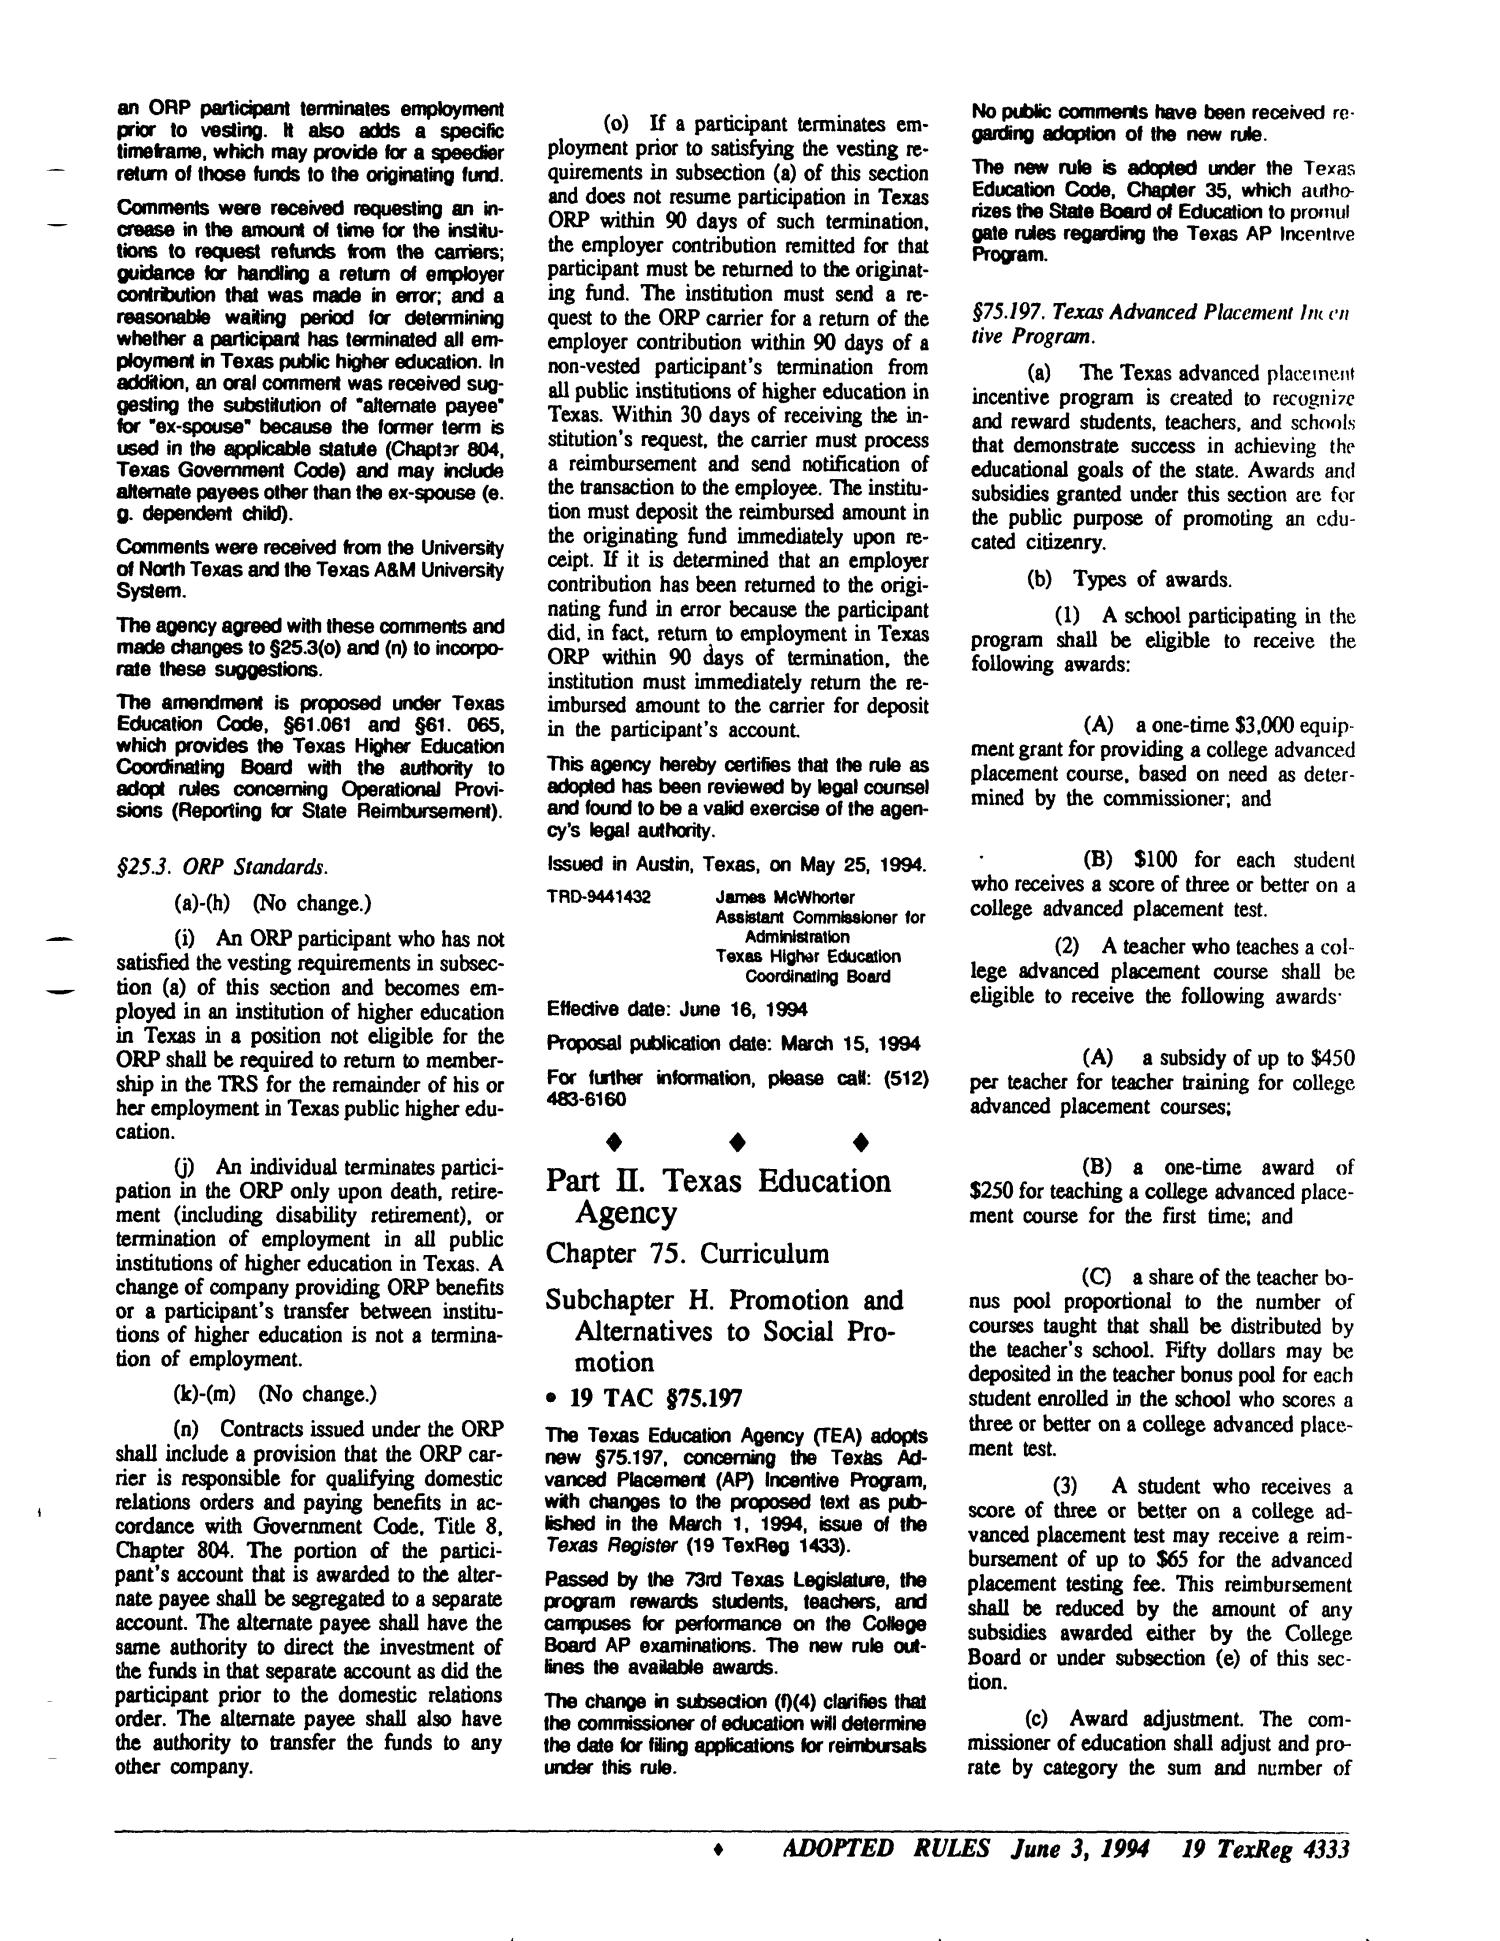 Texas Register, Volume 19, Number 41, Pages 4291-4362, June 3, 1994
                                                
                                                    4333
                                                